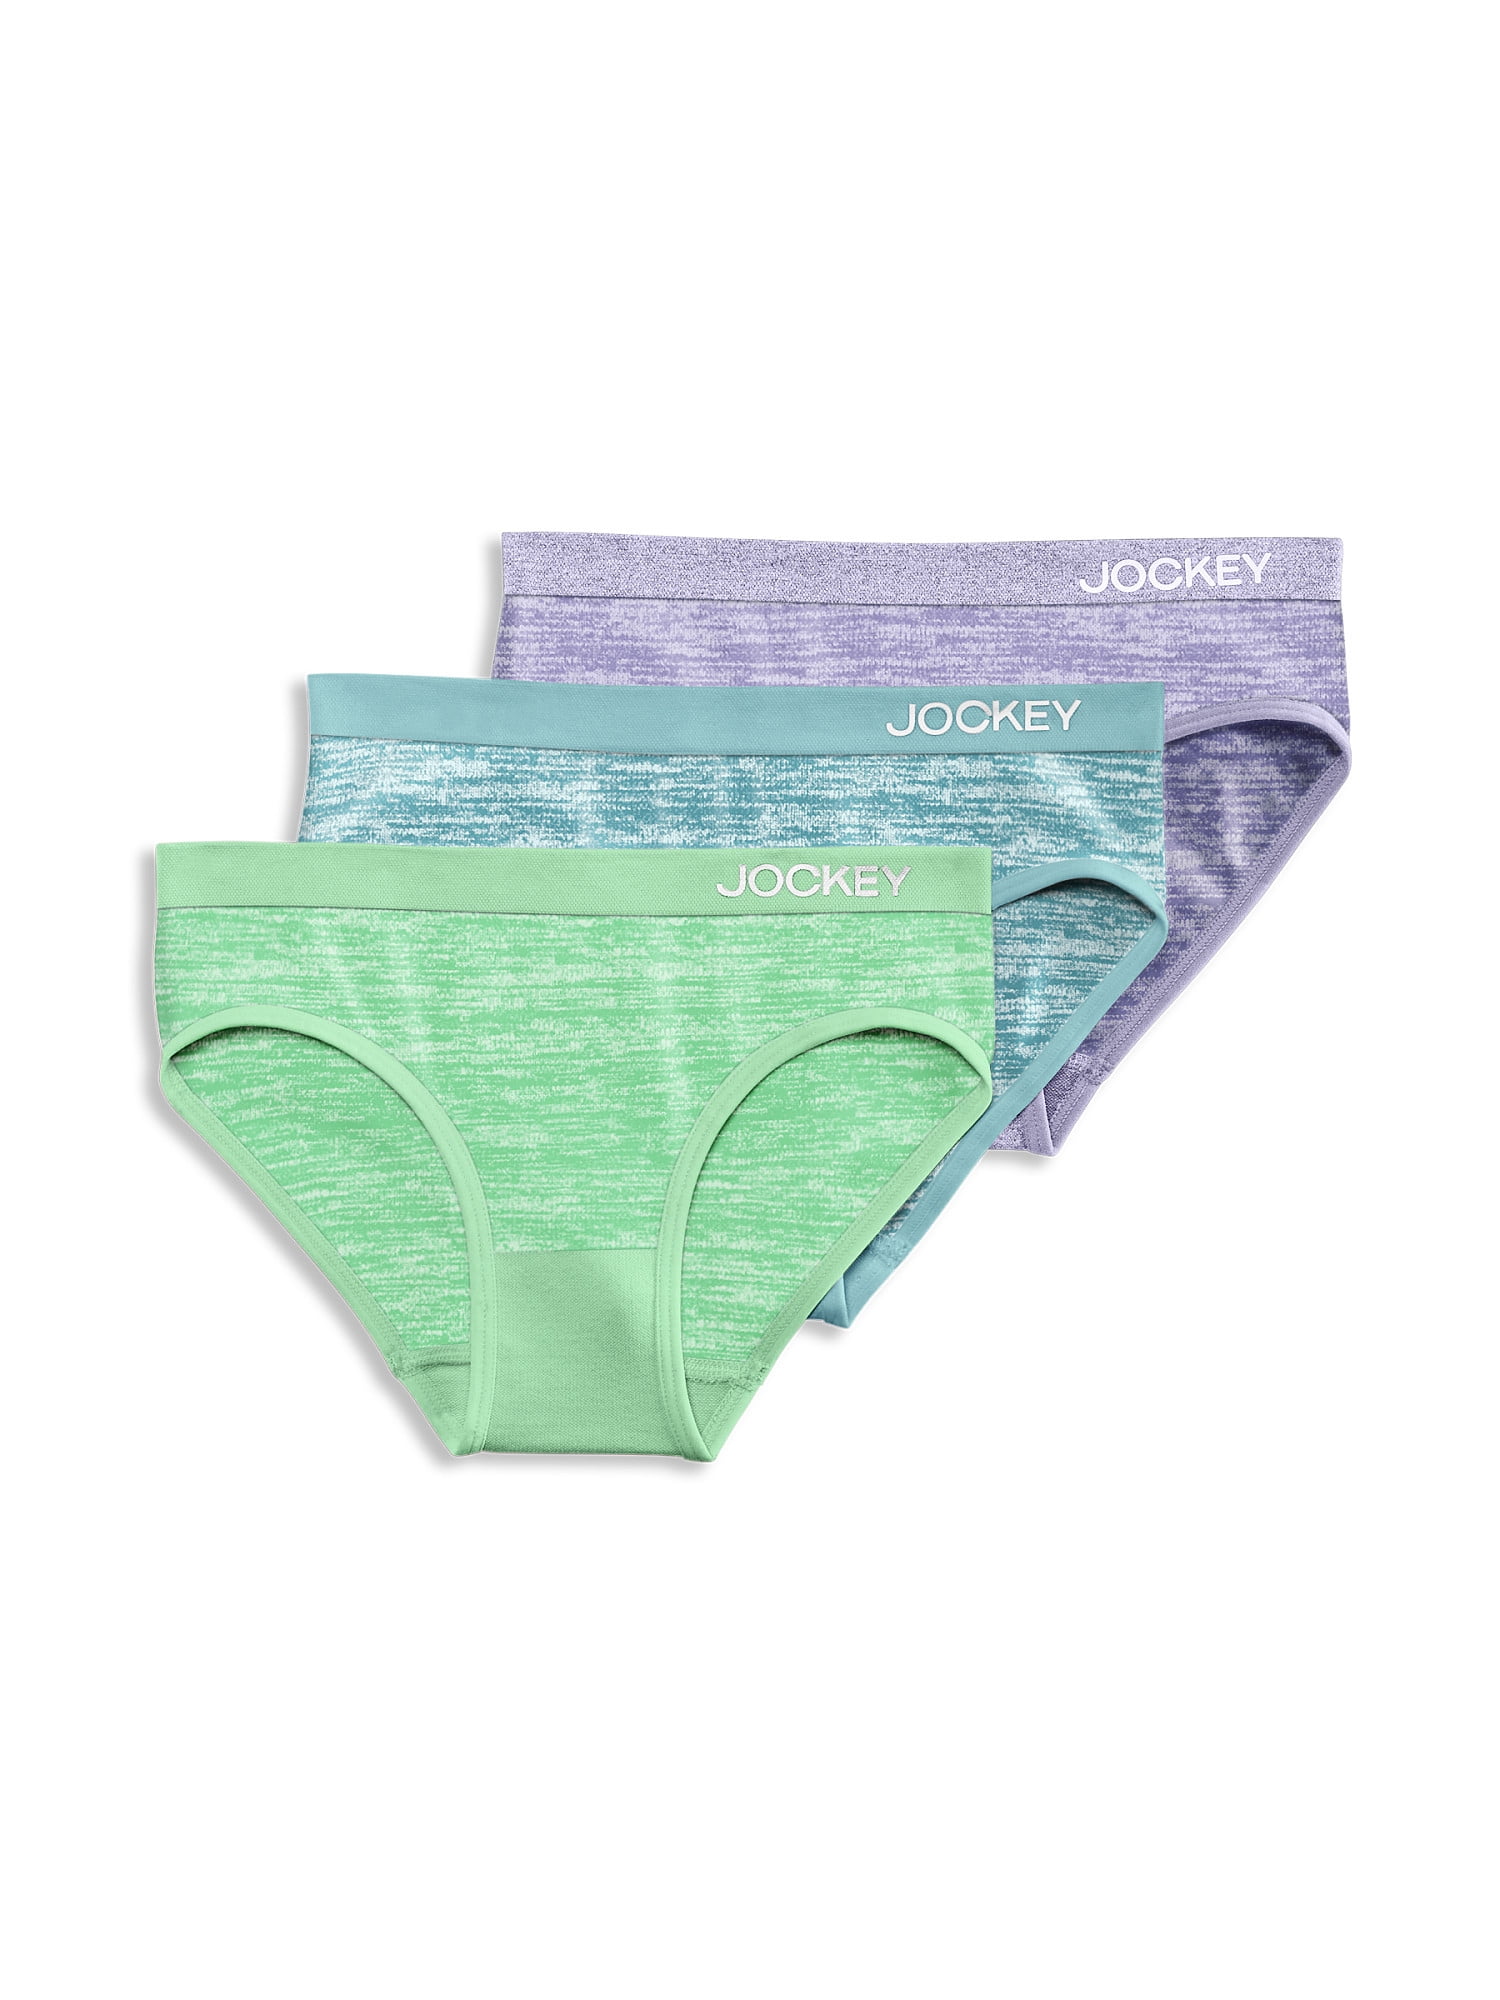 Jockey® Essentials Girls' Seamfree® Bikini - 3 pack, Sizes S-XL (6-16) 